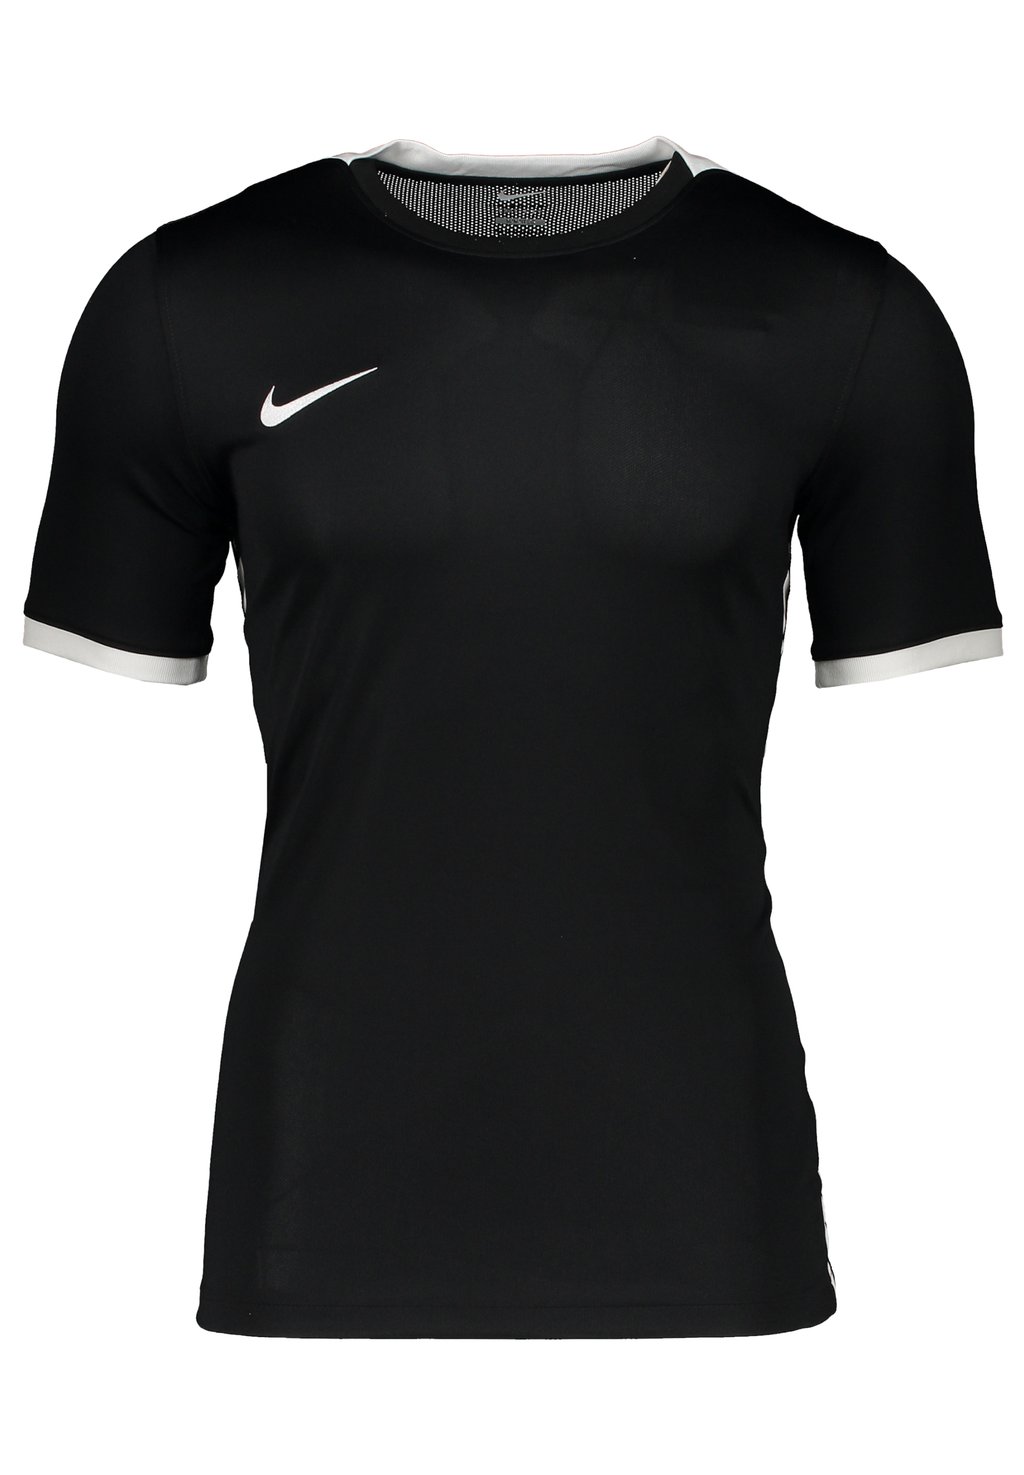 Футболка базовая TEAMSPORT Nike, цвет schwarzweiss футболка базовая teamsport nike цвет schwarzweiss